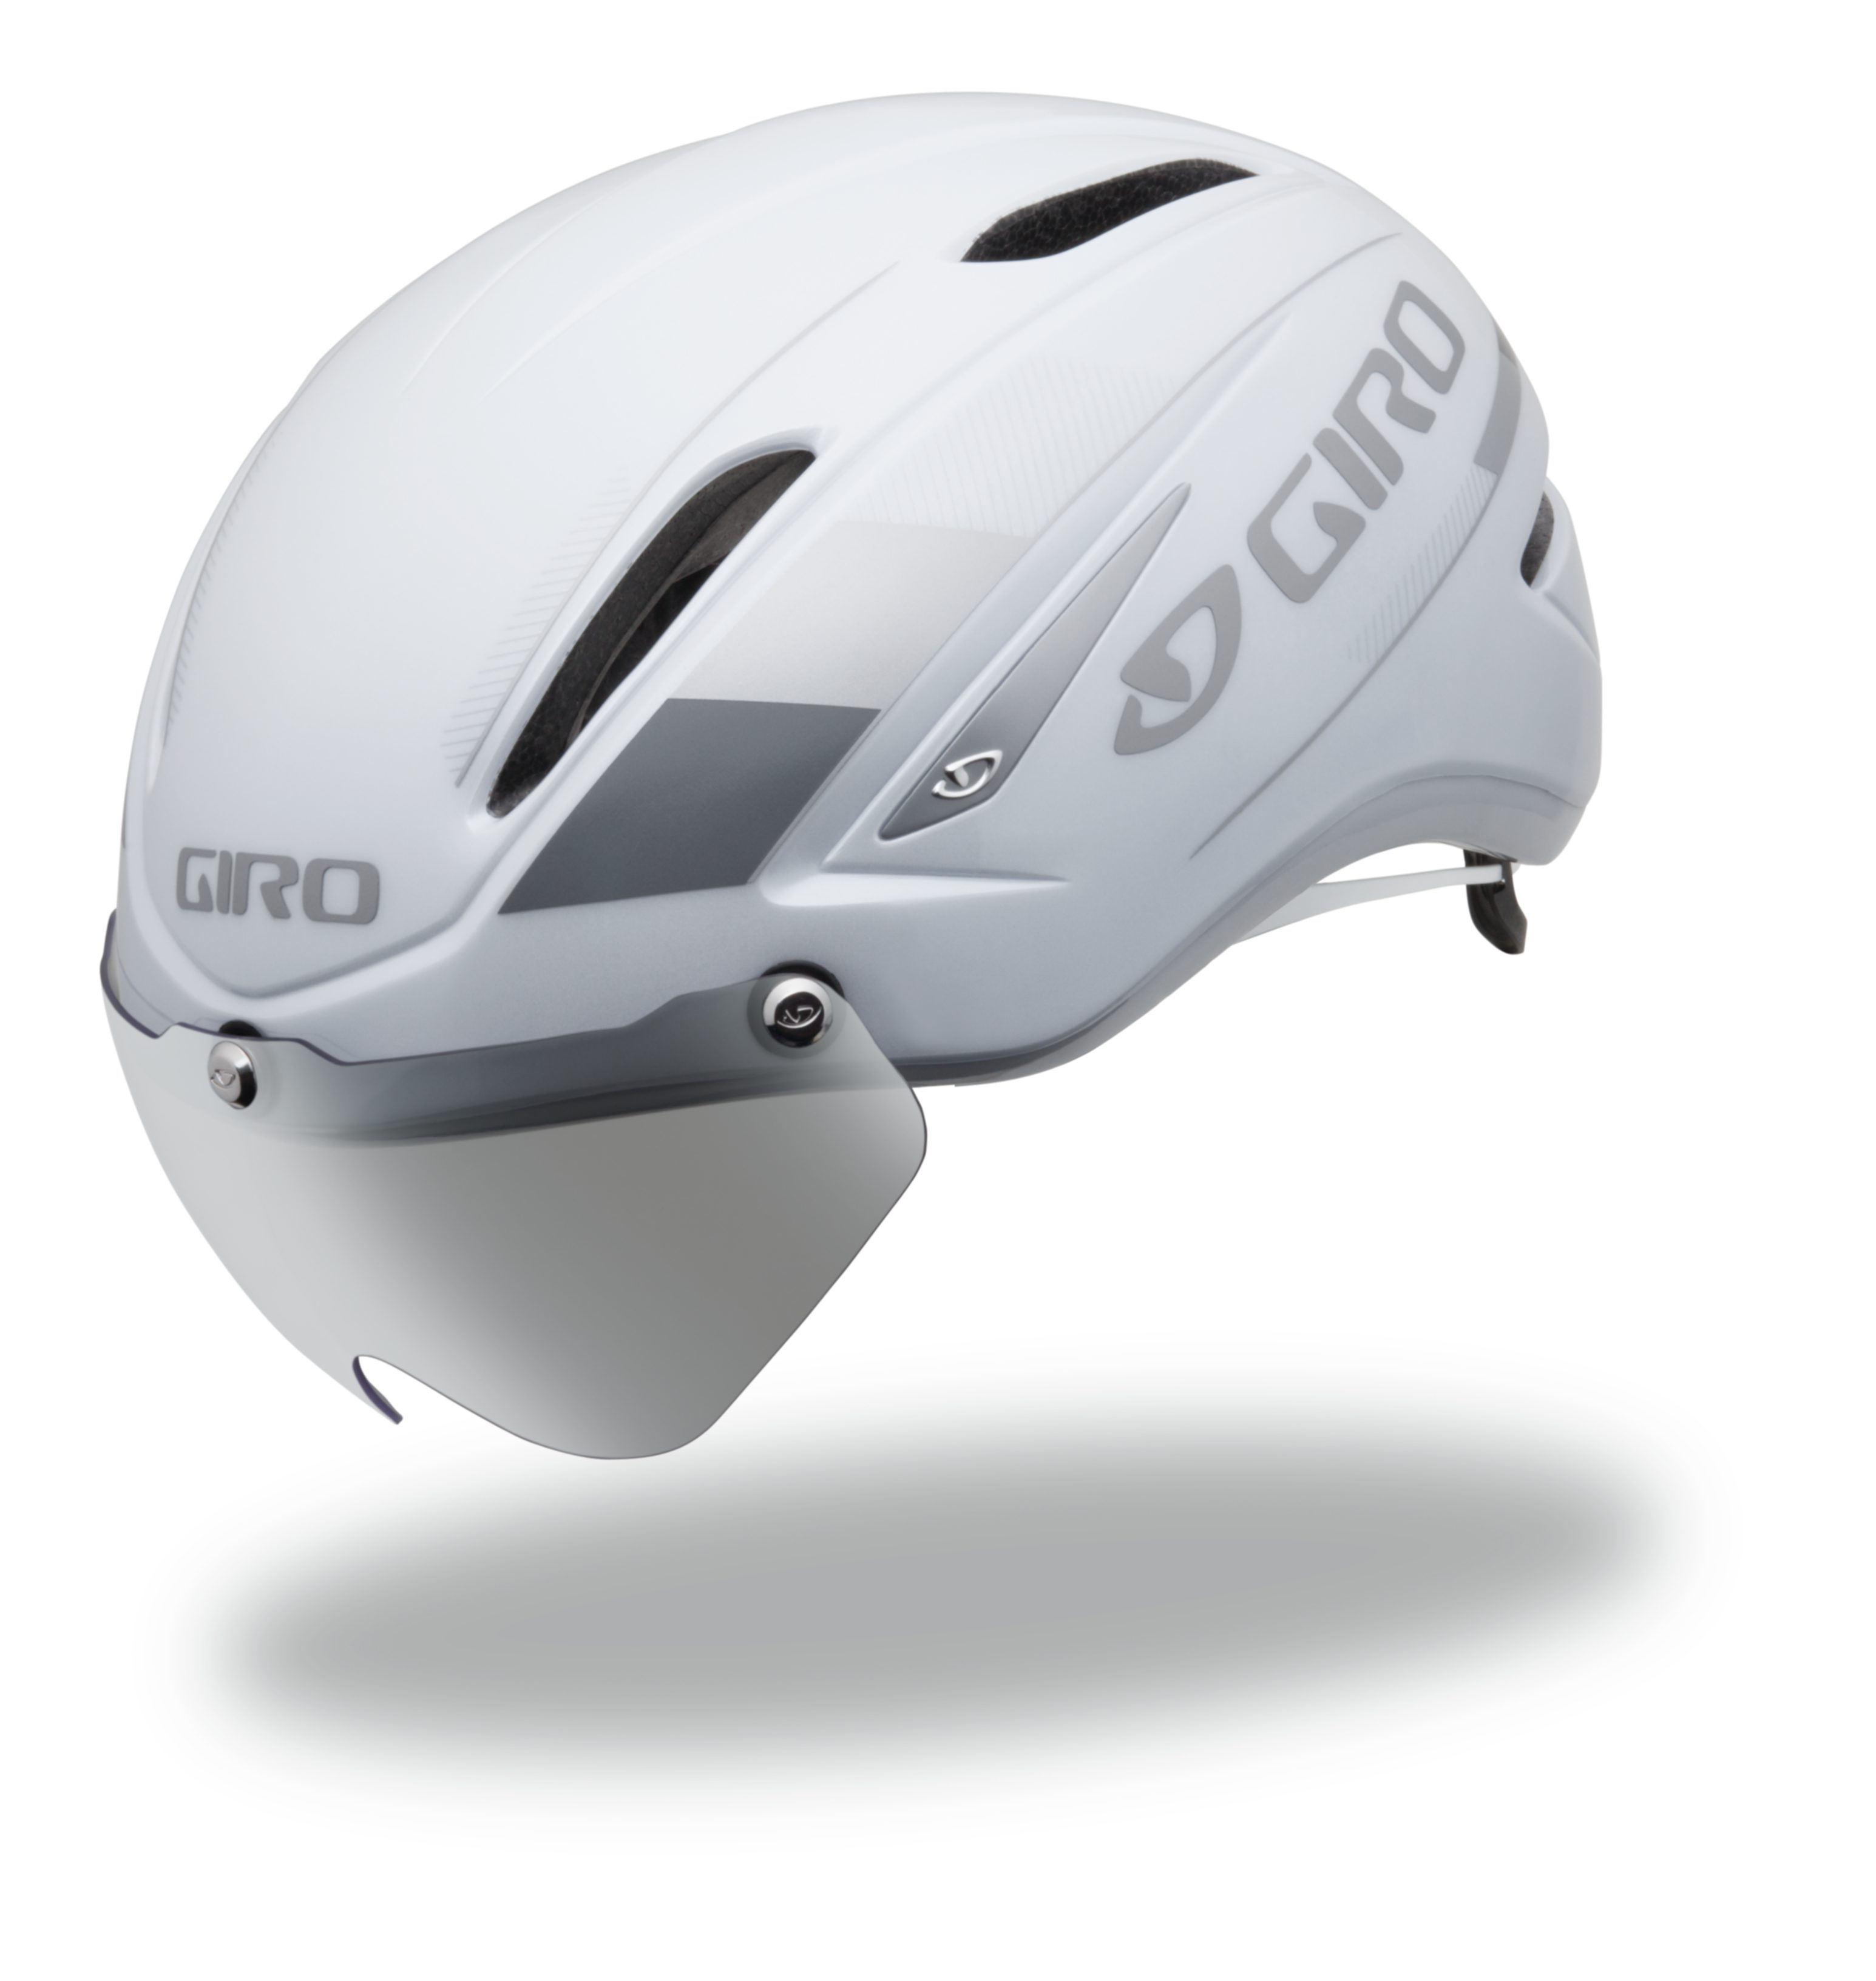 Giro Air Attack An Aero helmet for all conditions Triathlon Magazine